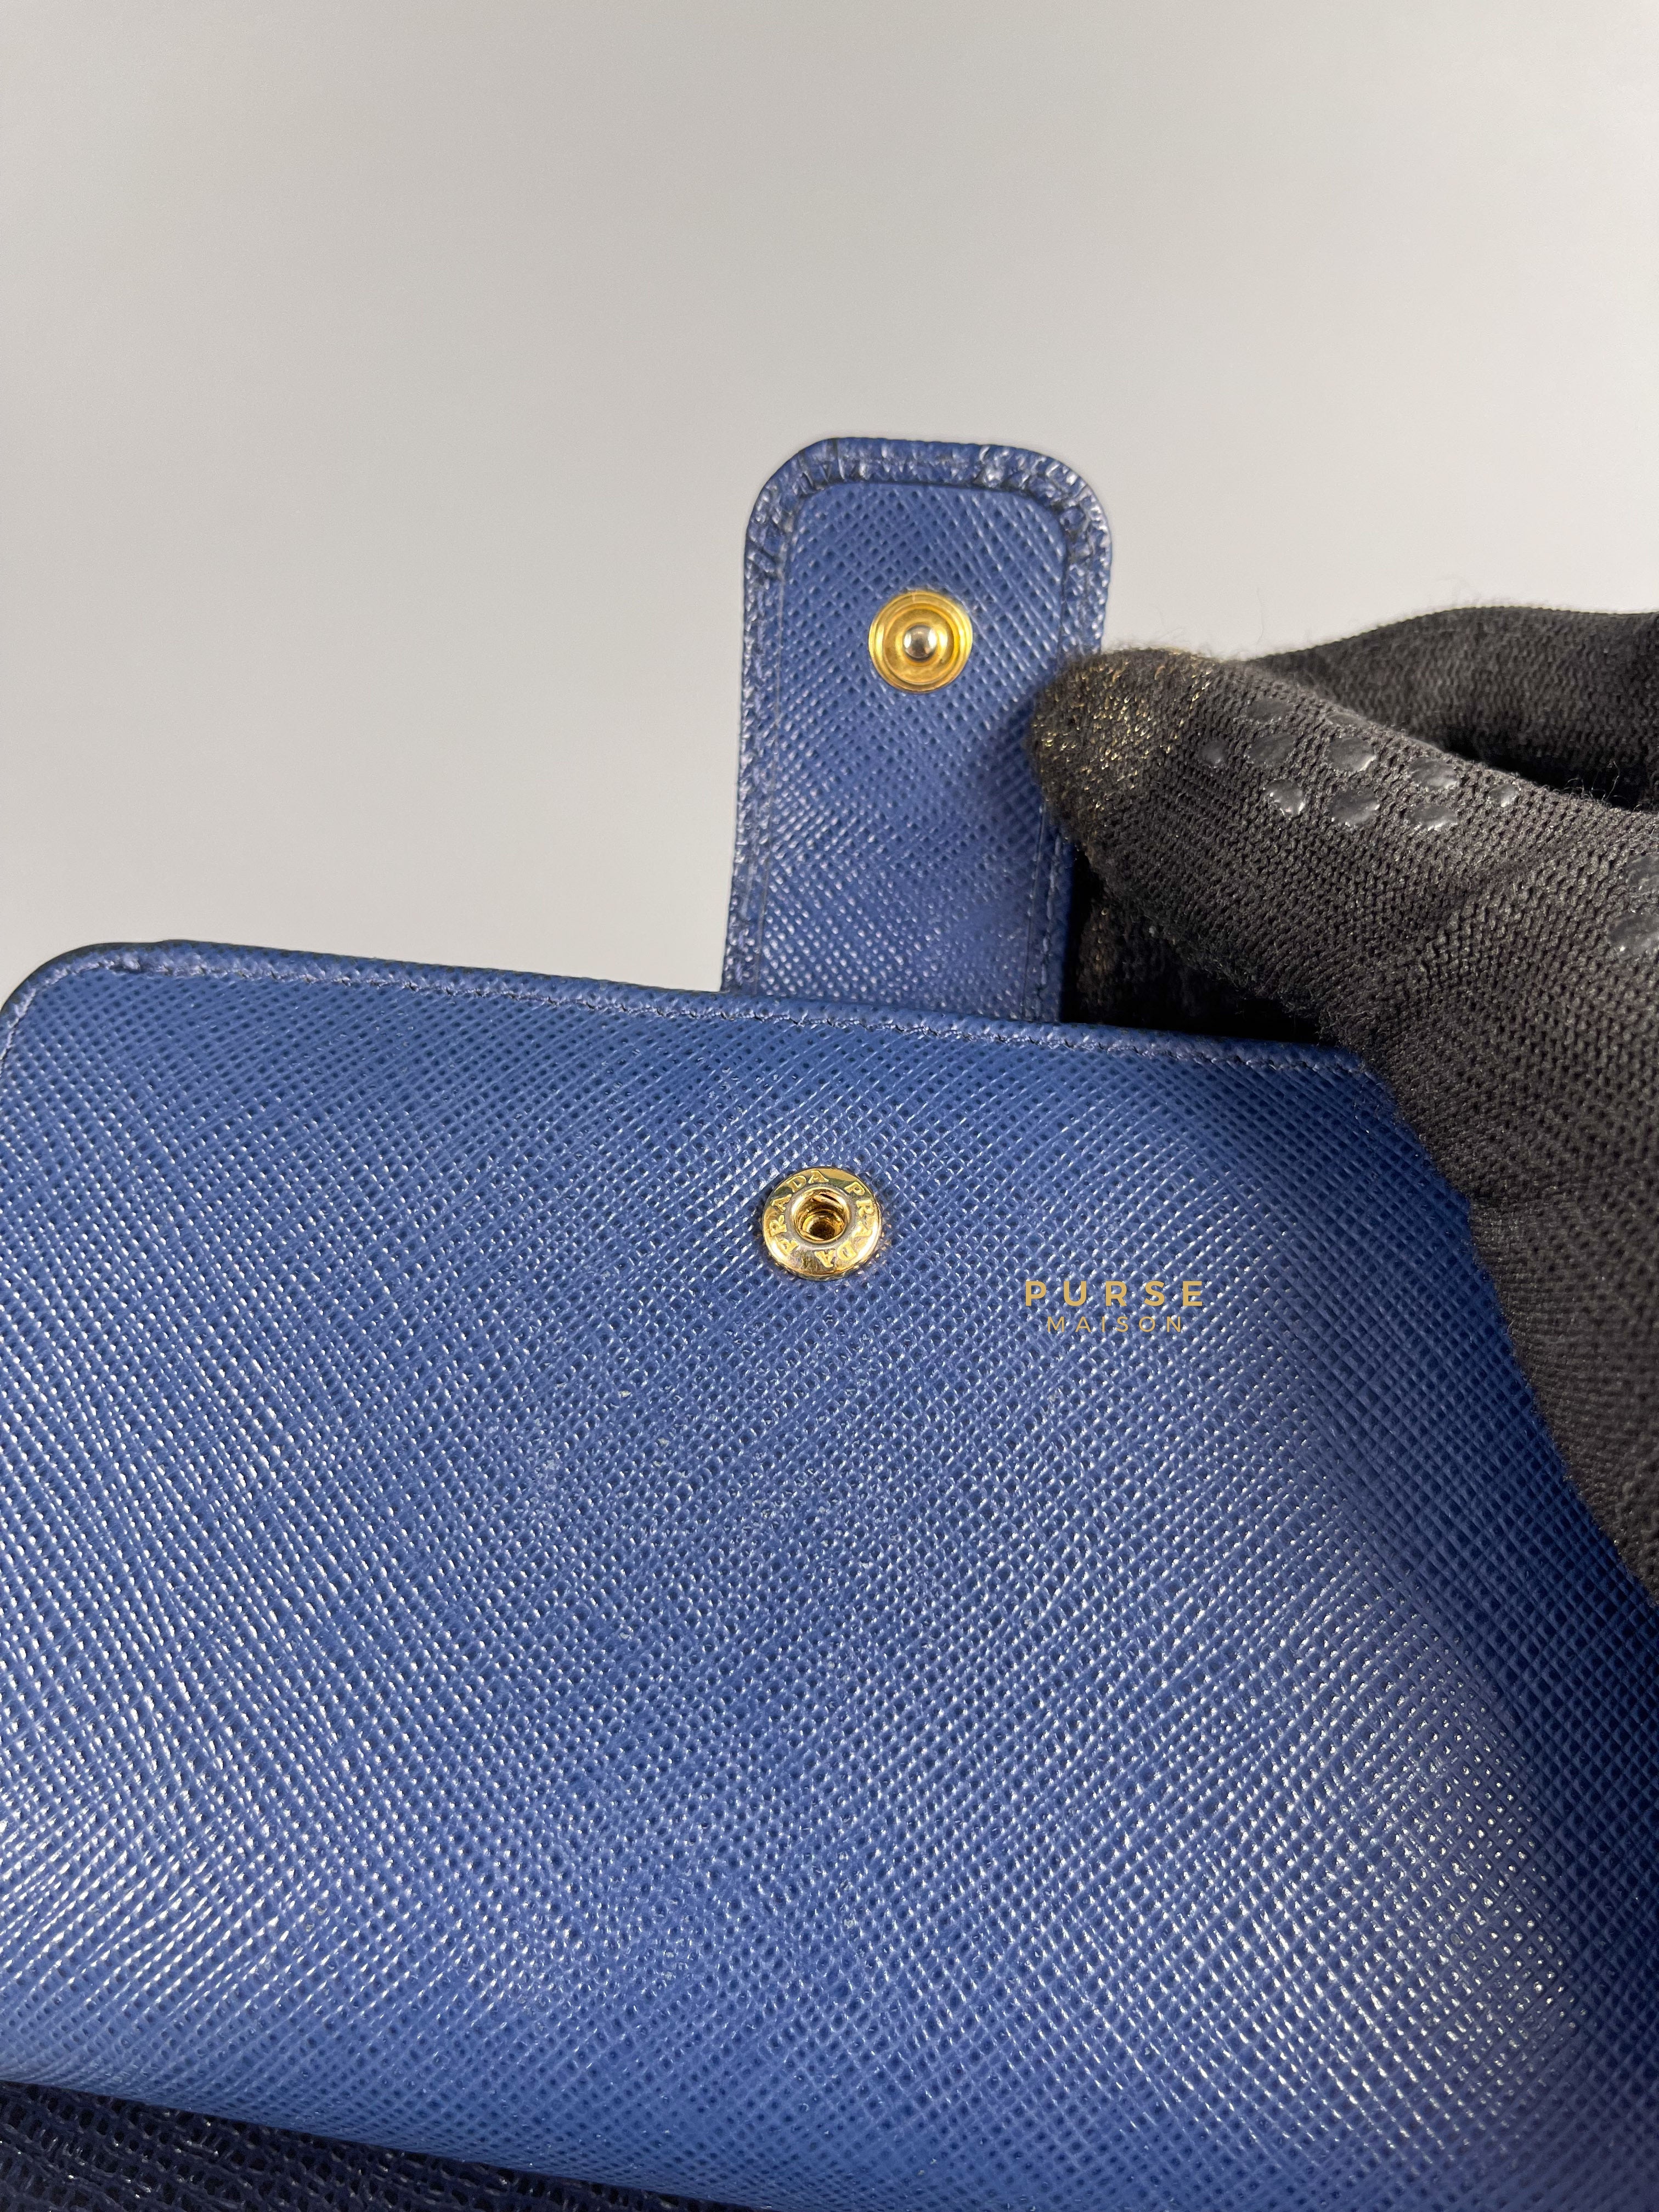 Prada 1ML225 Bifold Small Blue Safiano Leather | Purse Maison Luxury Bags Shop